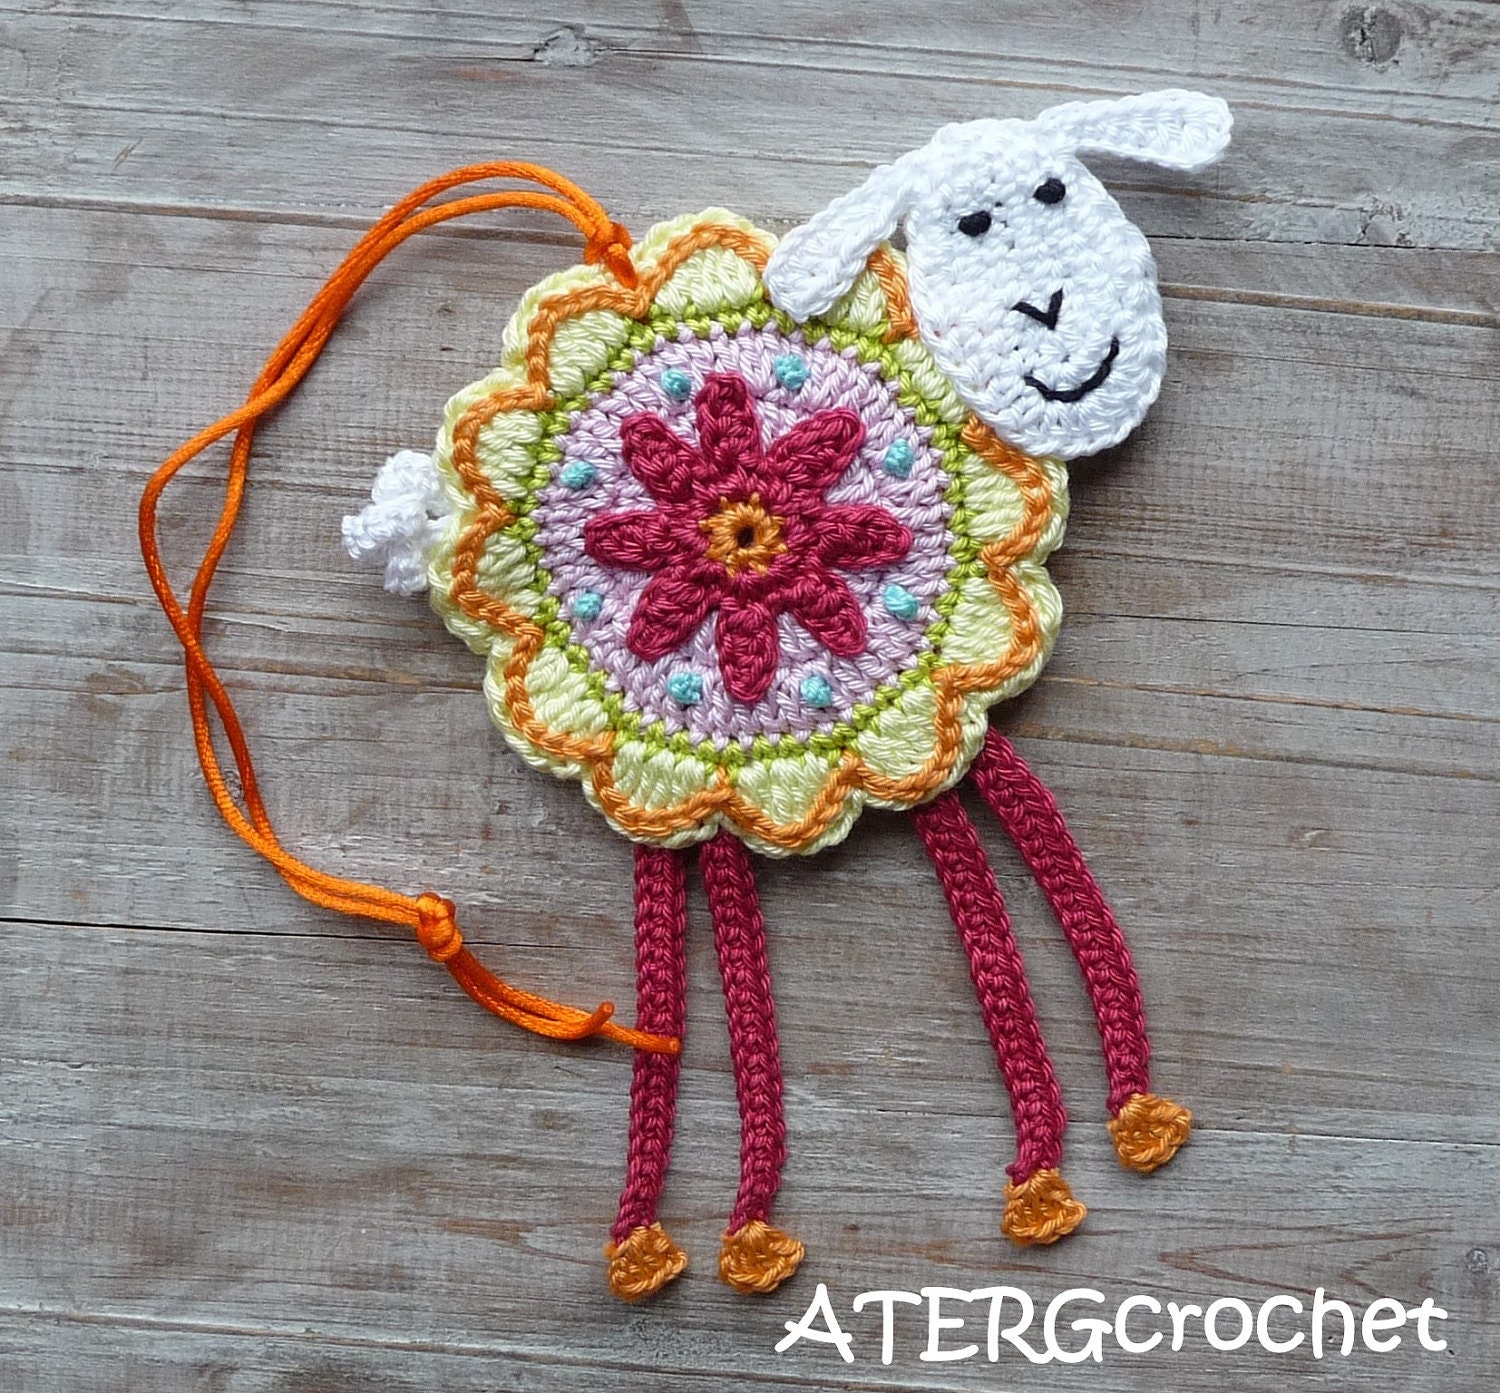 Colorful crochet 'flower sheep' by ATERGcrochet